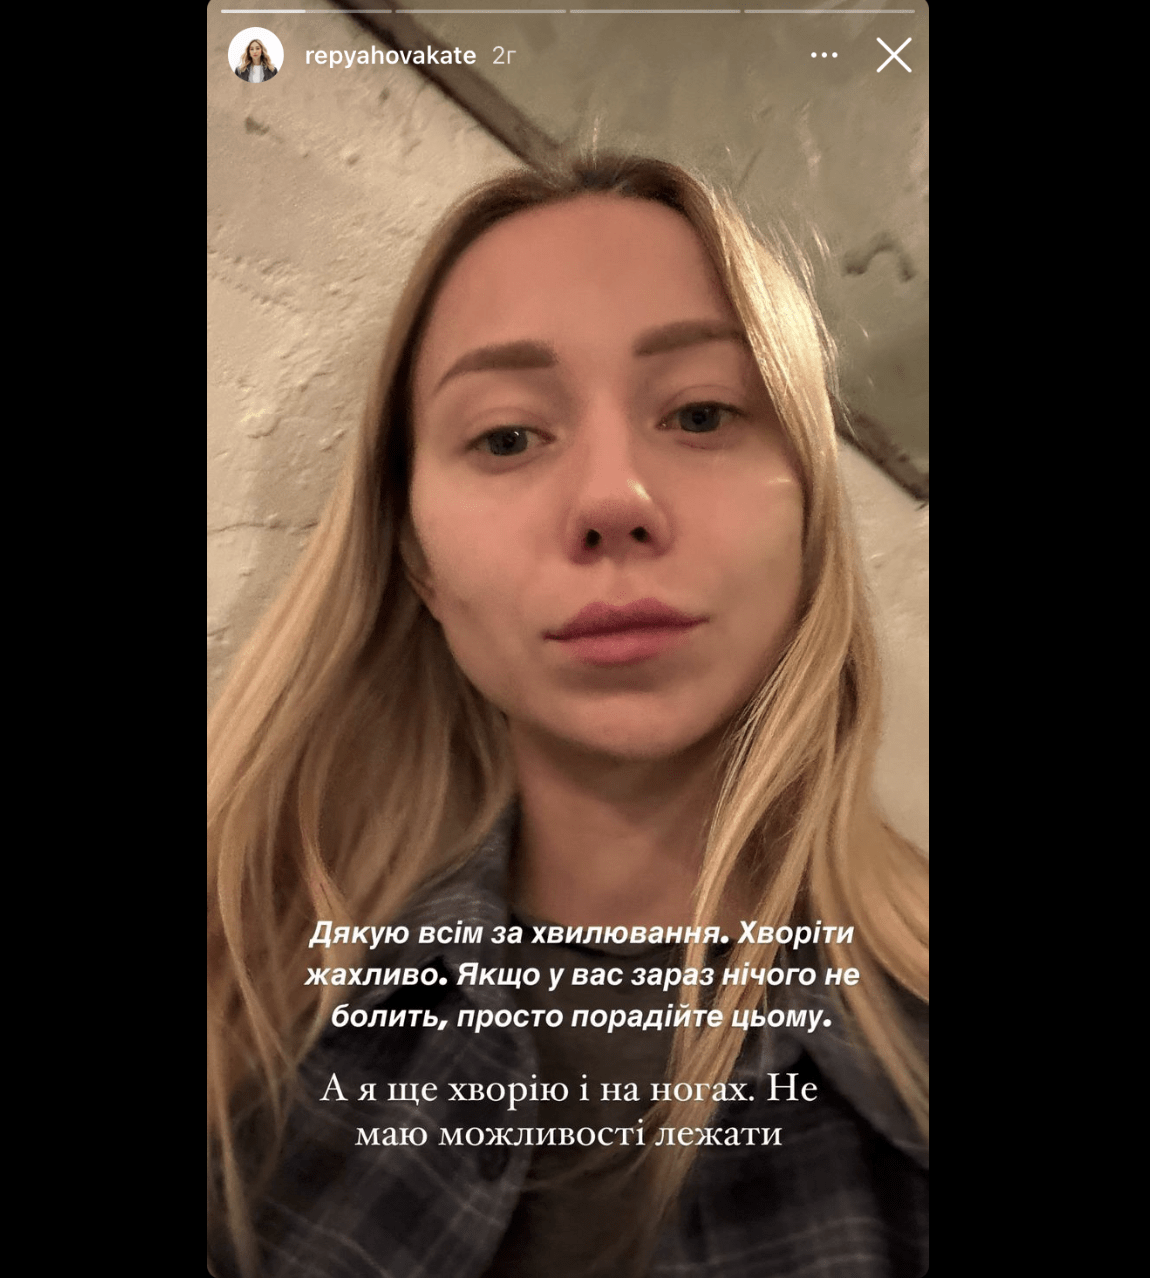 Катерина Репяхова розповіла про погане самопочуття 